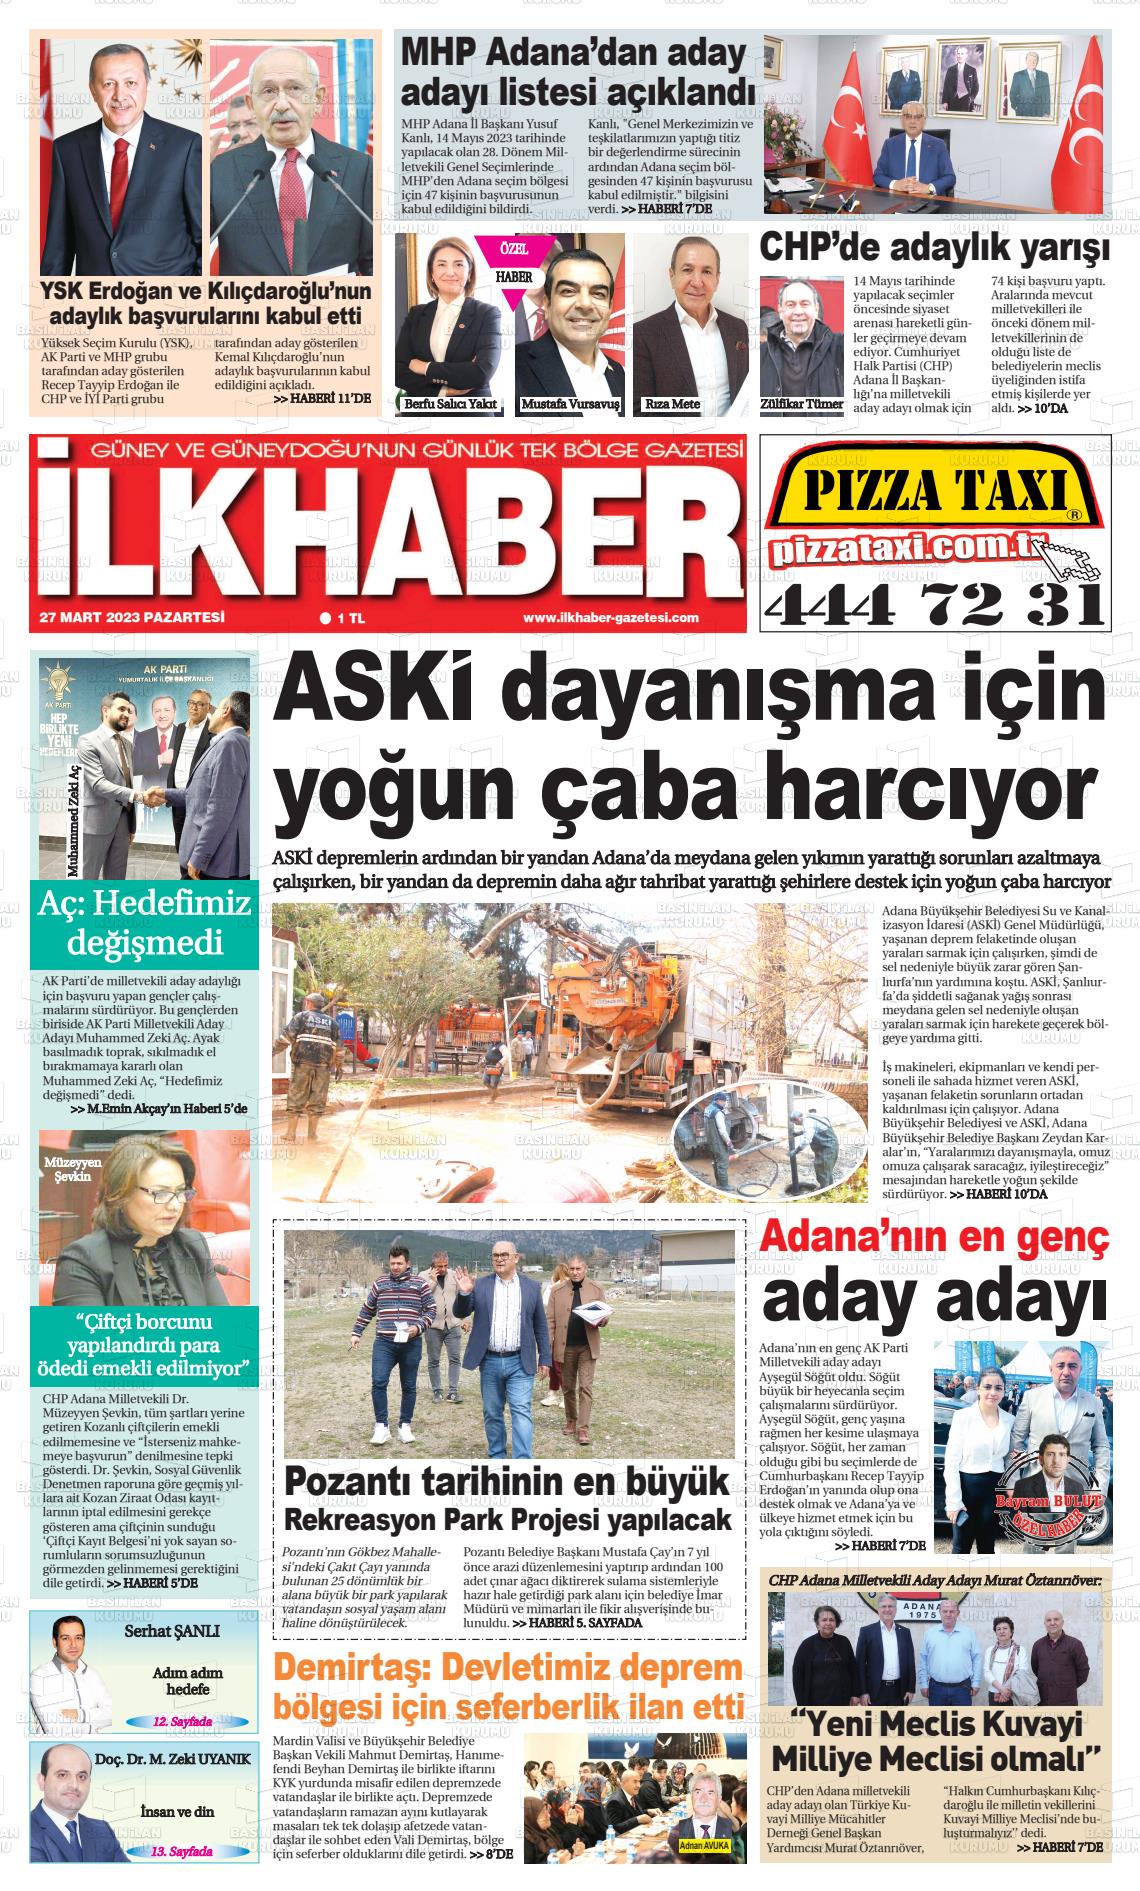 27 Mart 2023 İlk Haber Gazete Manşeti